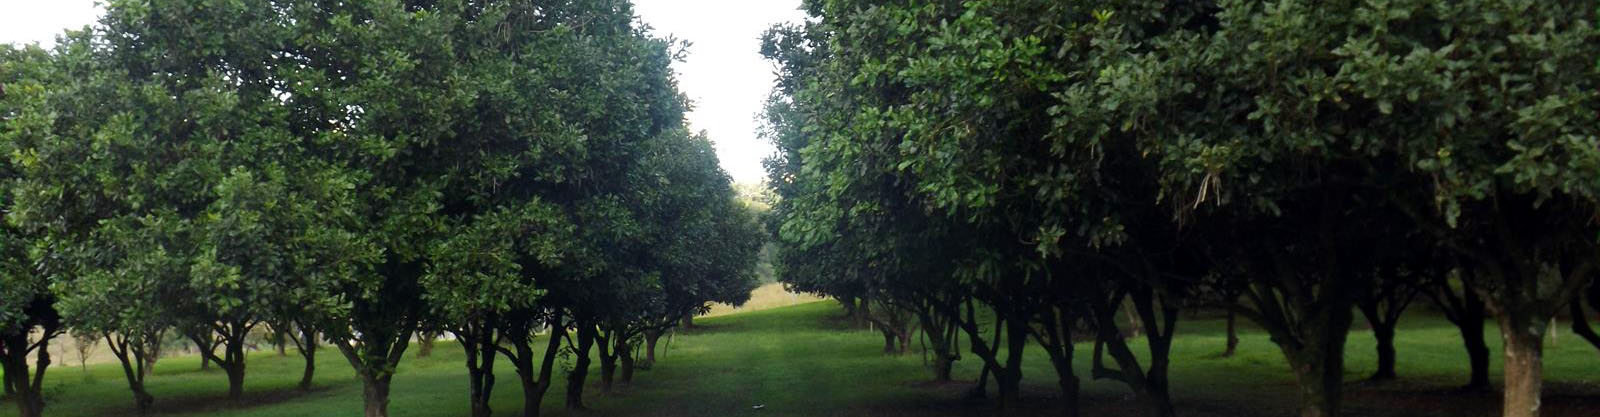 Kenedys Lane Orchard